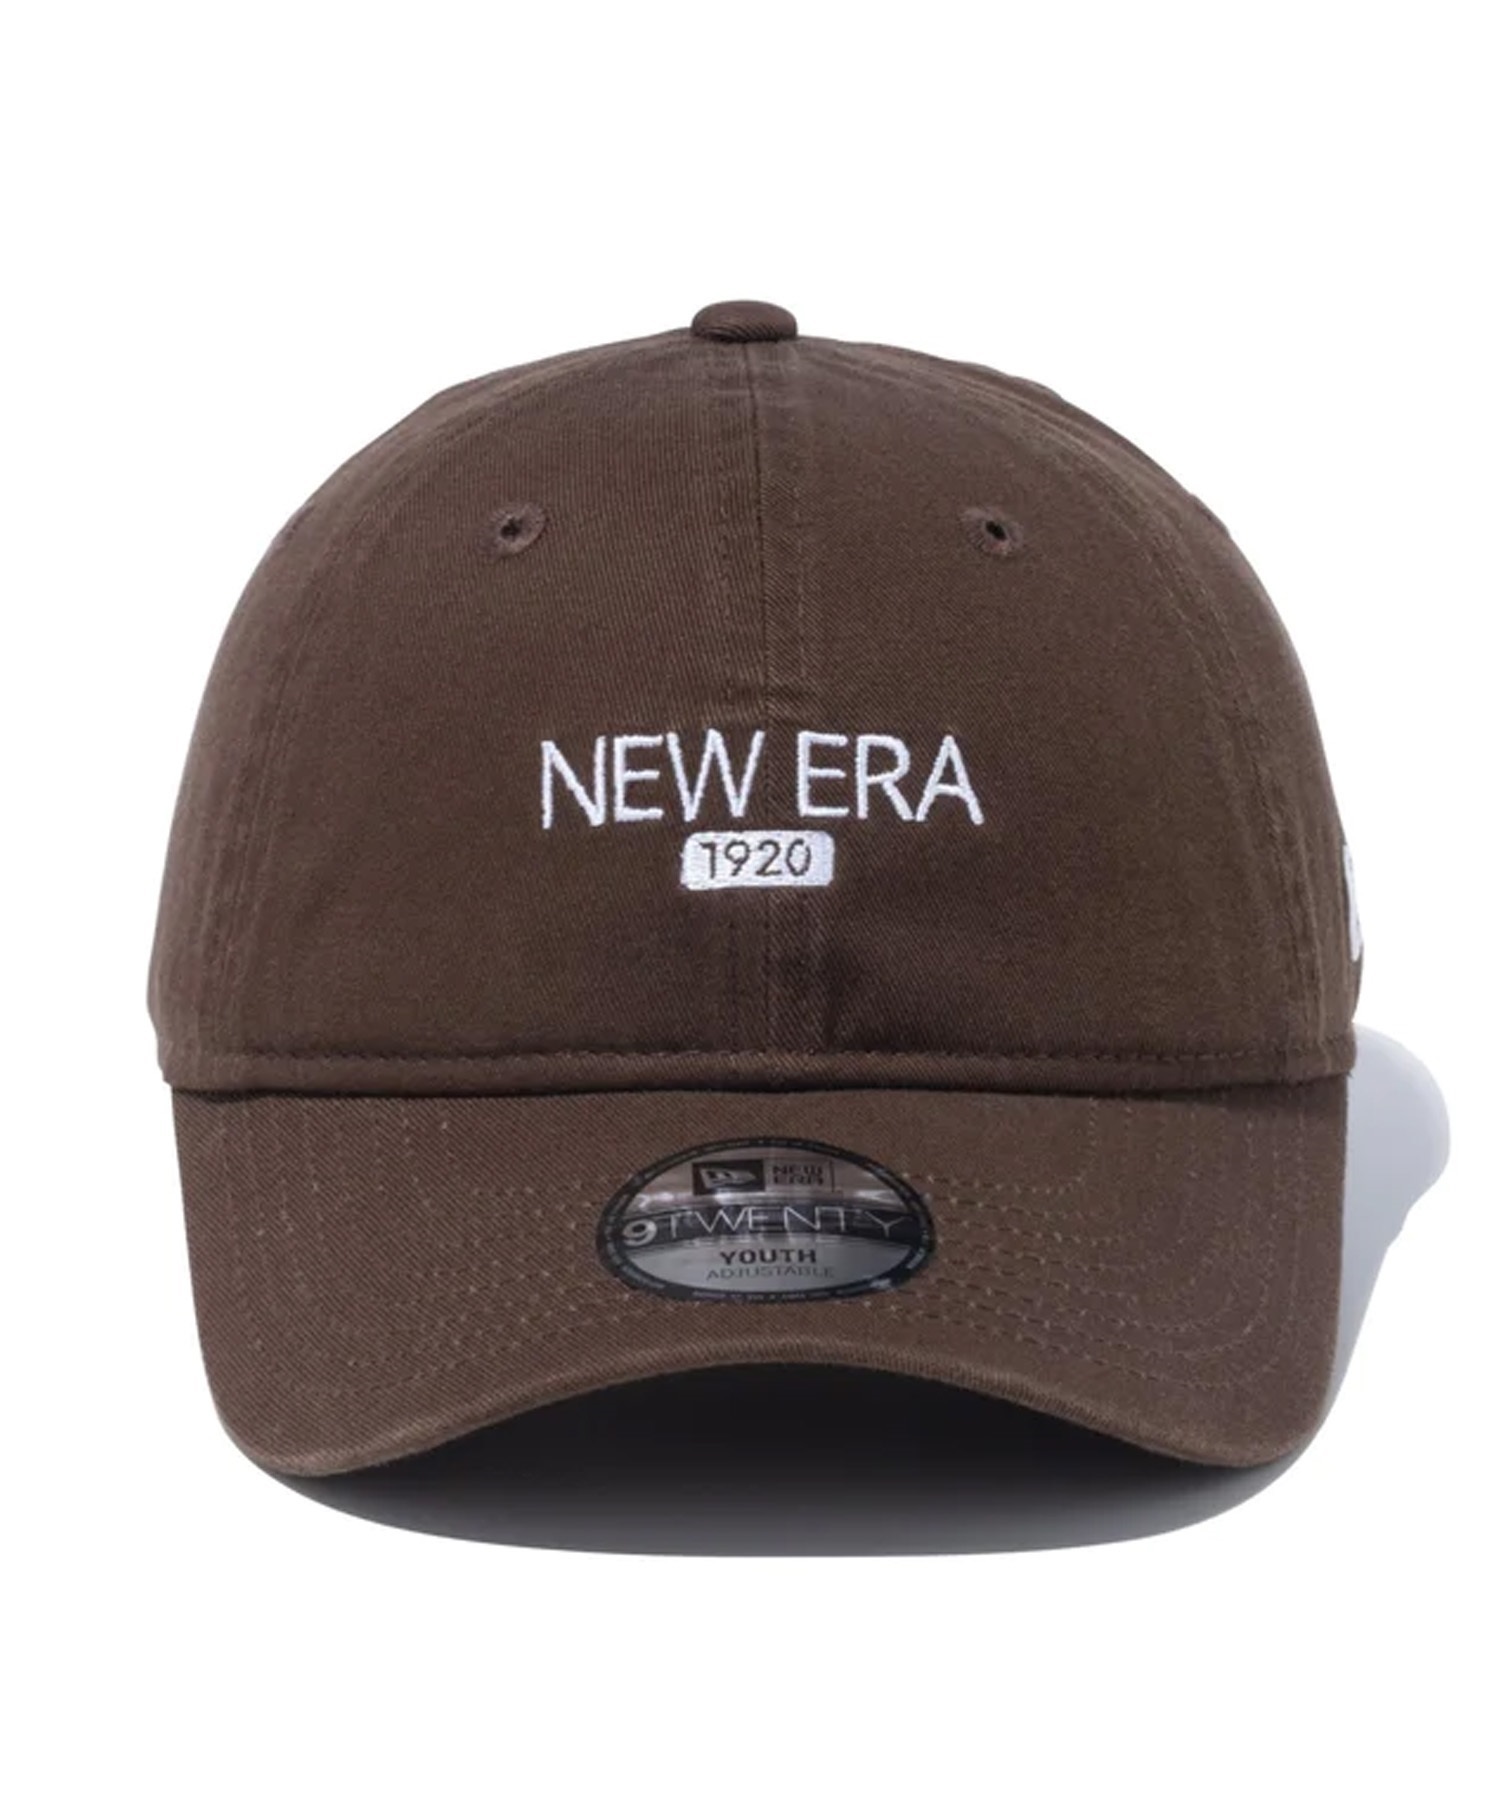 NEW ERA/ニューエラ Youth 9TWENTY New Era 1920 ウォルナット キッズ キャップ 帽子 13762821(WAL-YTH)